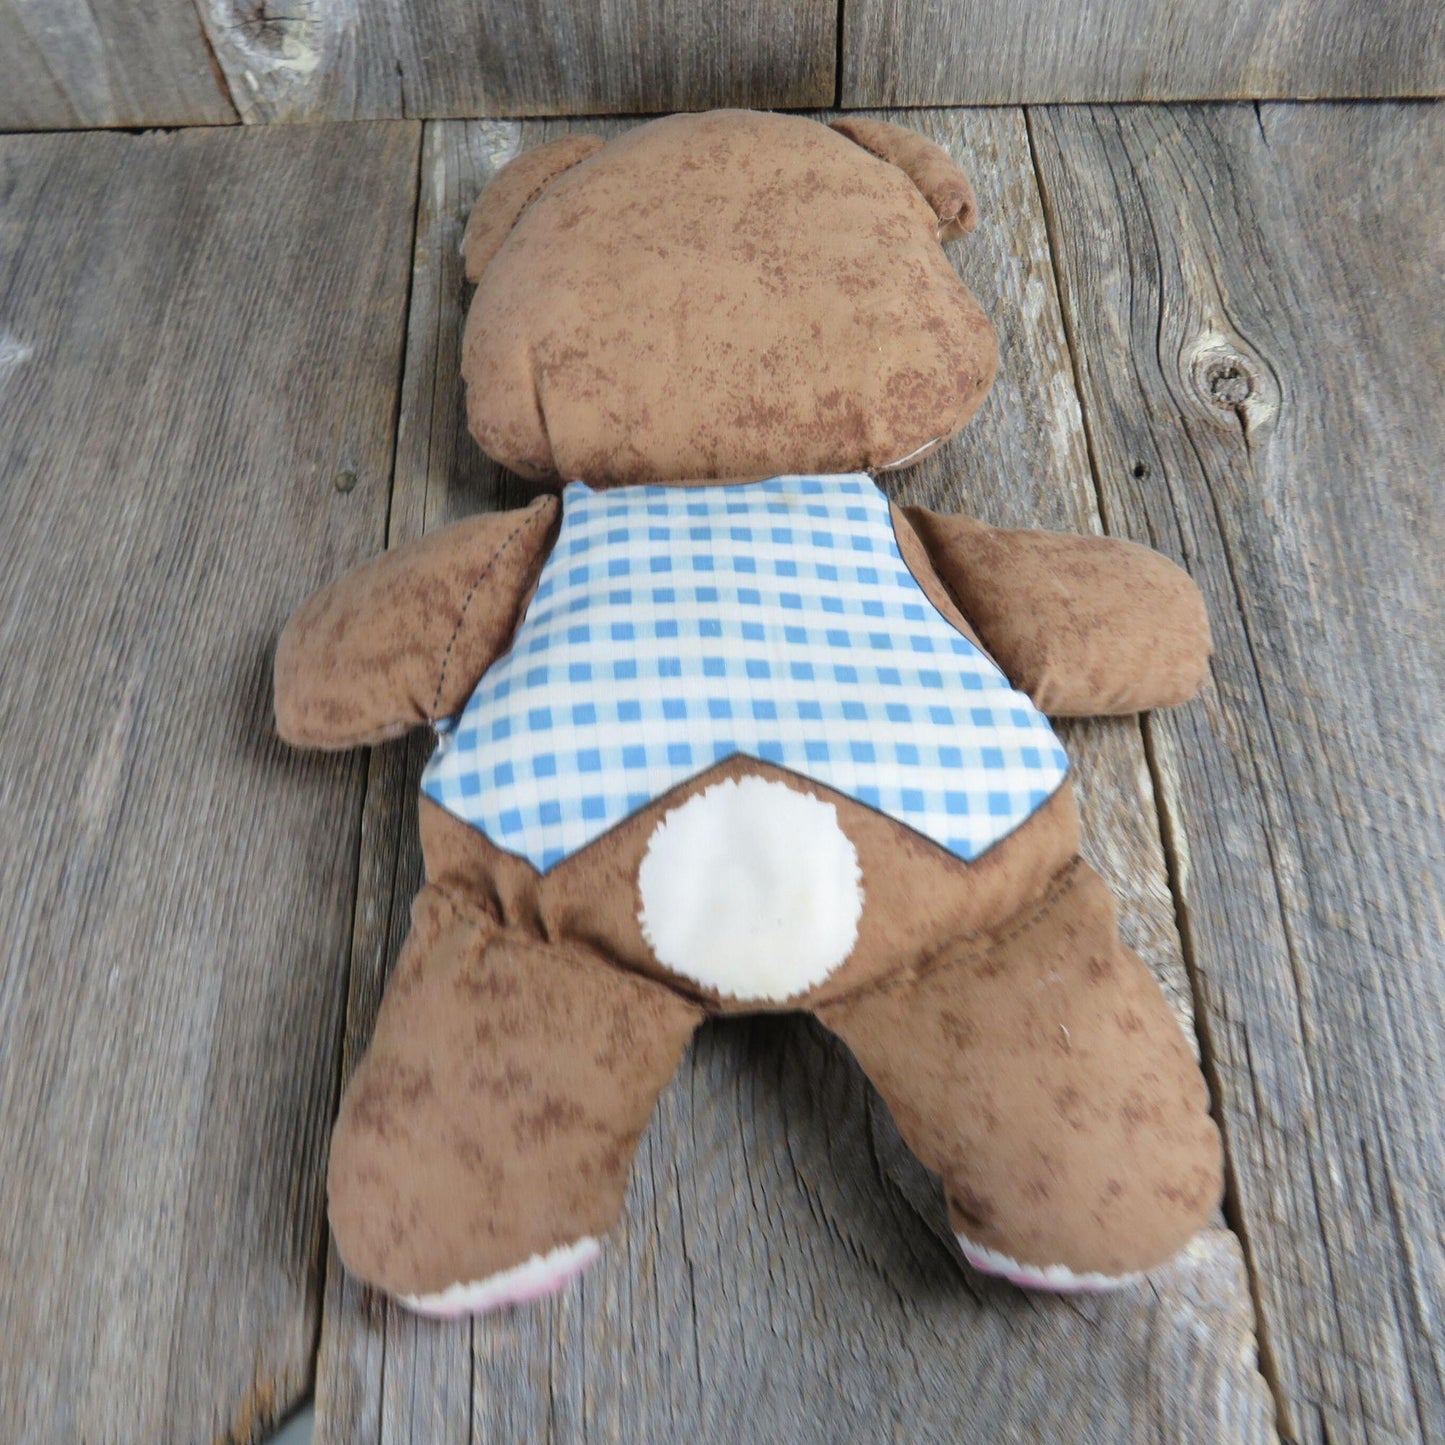 Vintage Girl Bear Plush Blue Checked Vest Pink Cheeks Fabric Body Cut and Sew Stuffed Animal